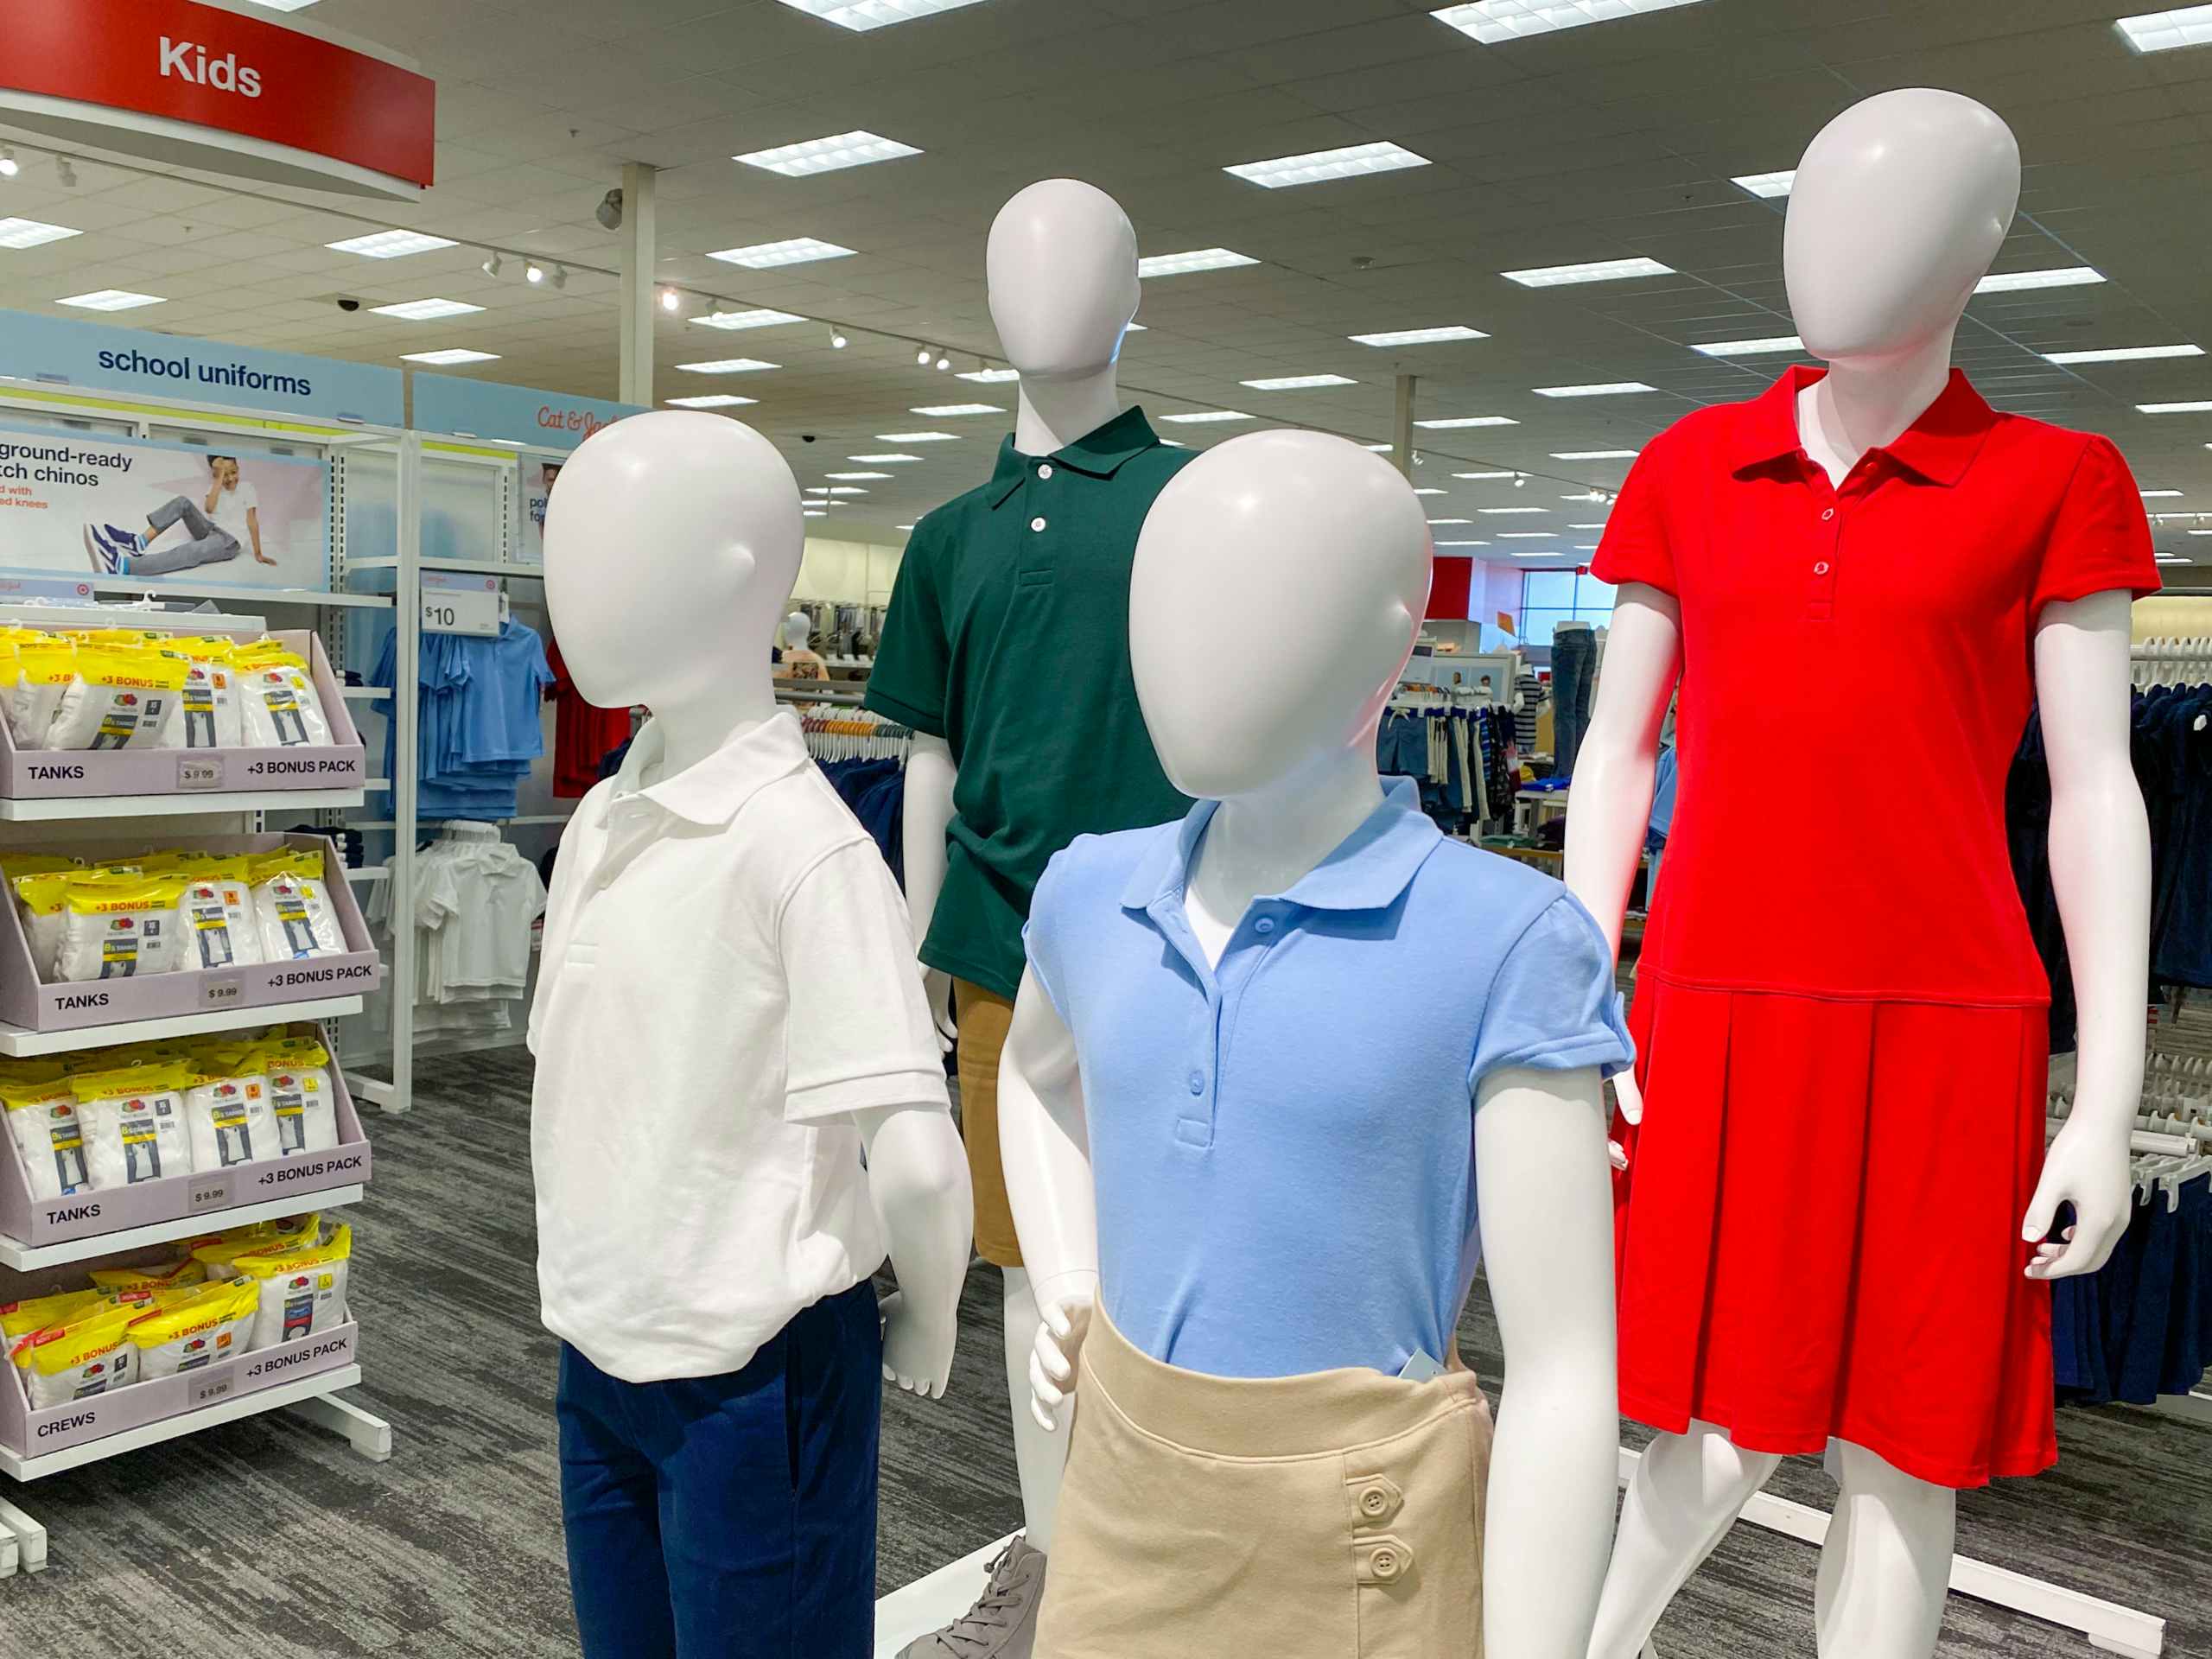 The Cat & Jack school uniform section mannequins displayed at Target.